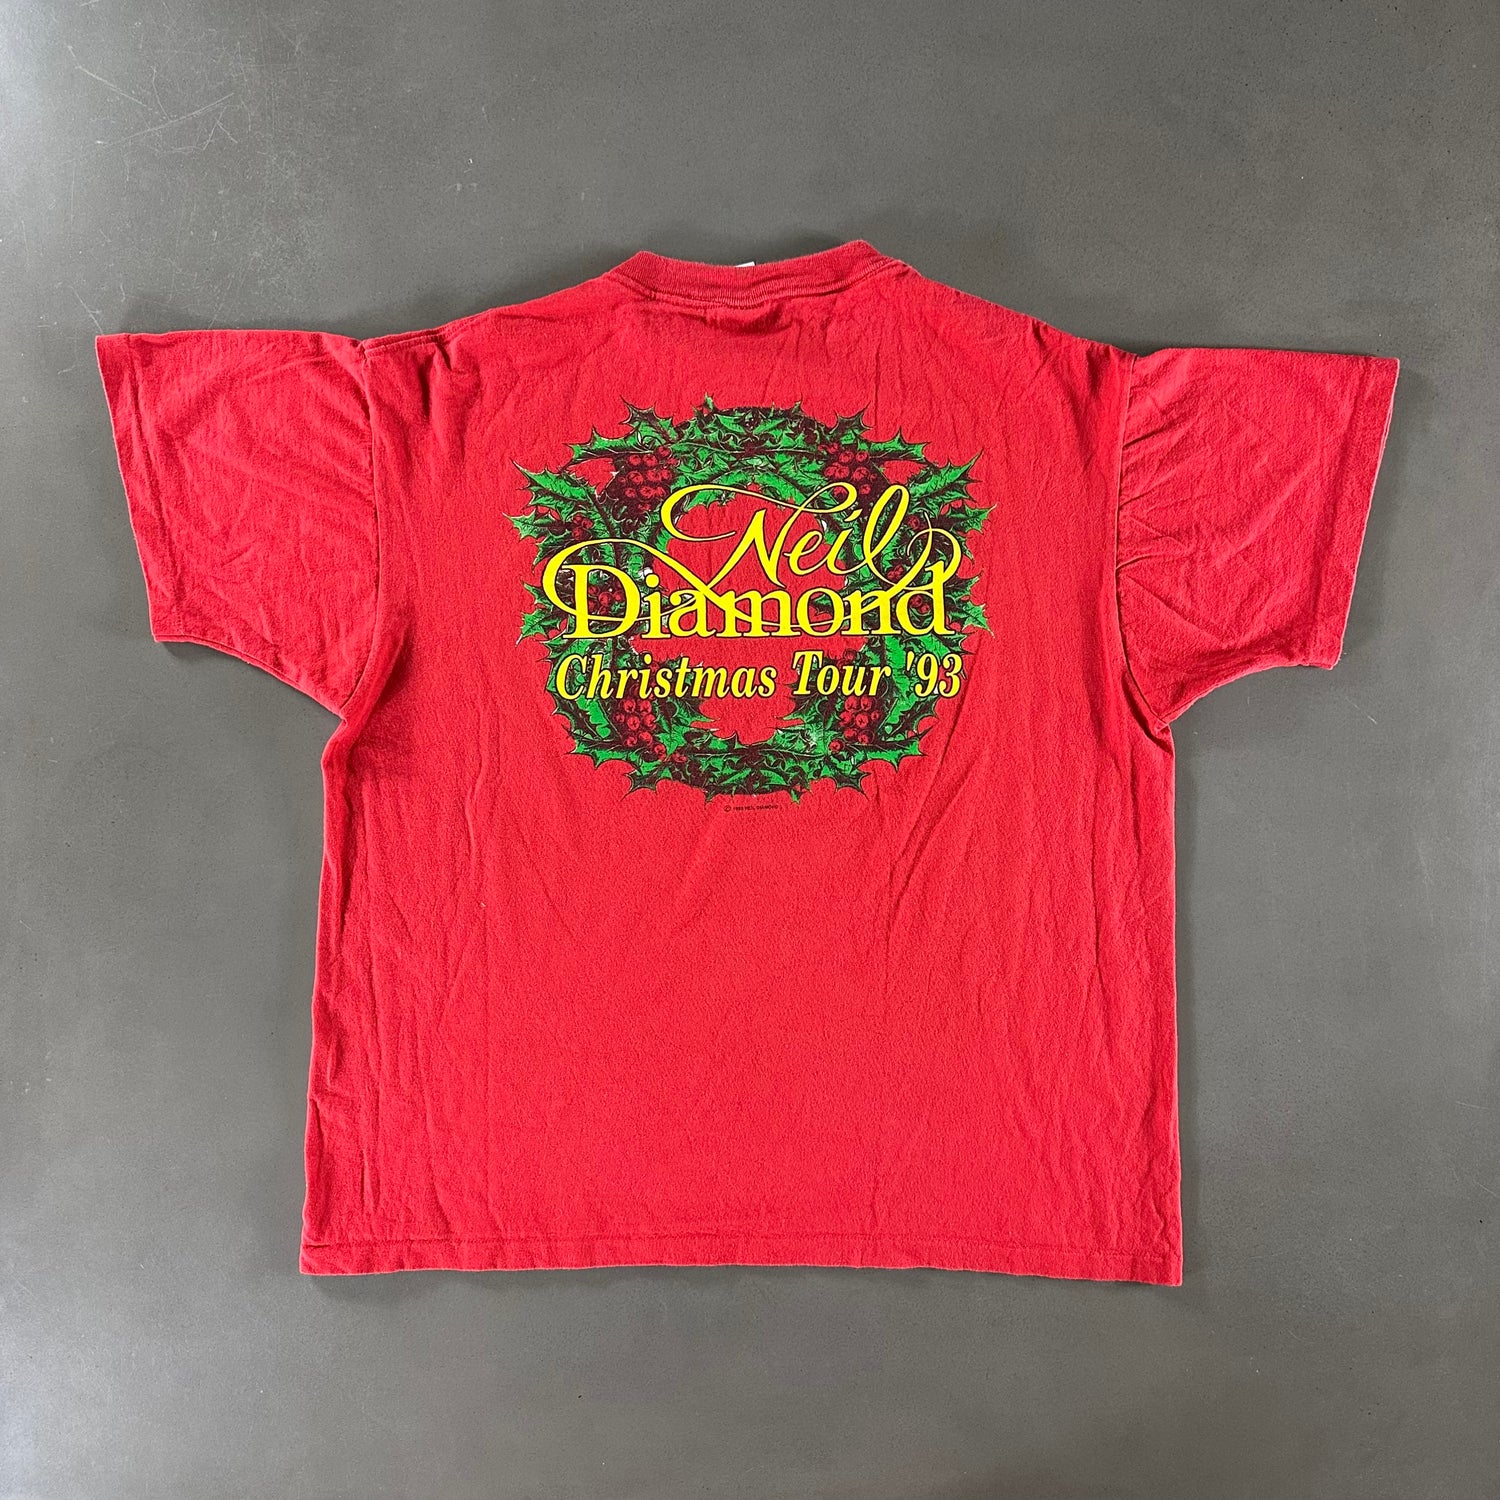 Vintage 1993 Neil Diamond T-shirt size XL